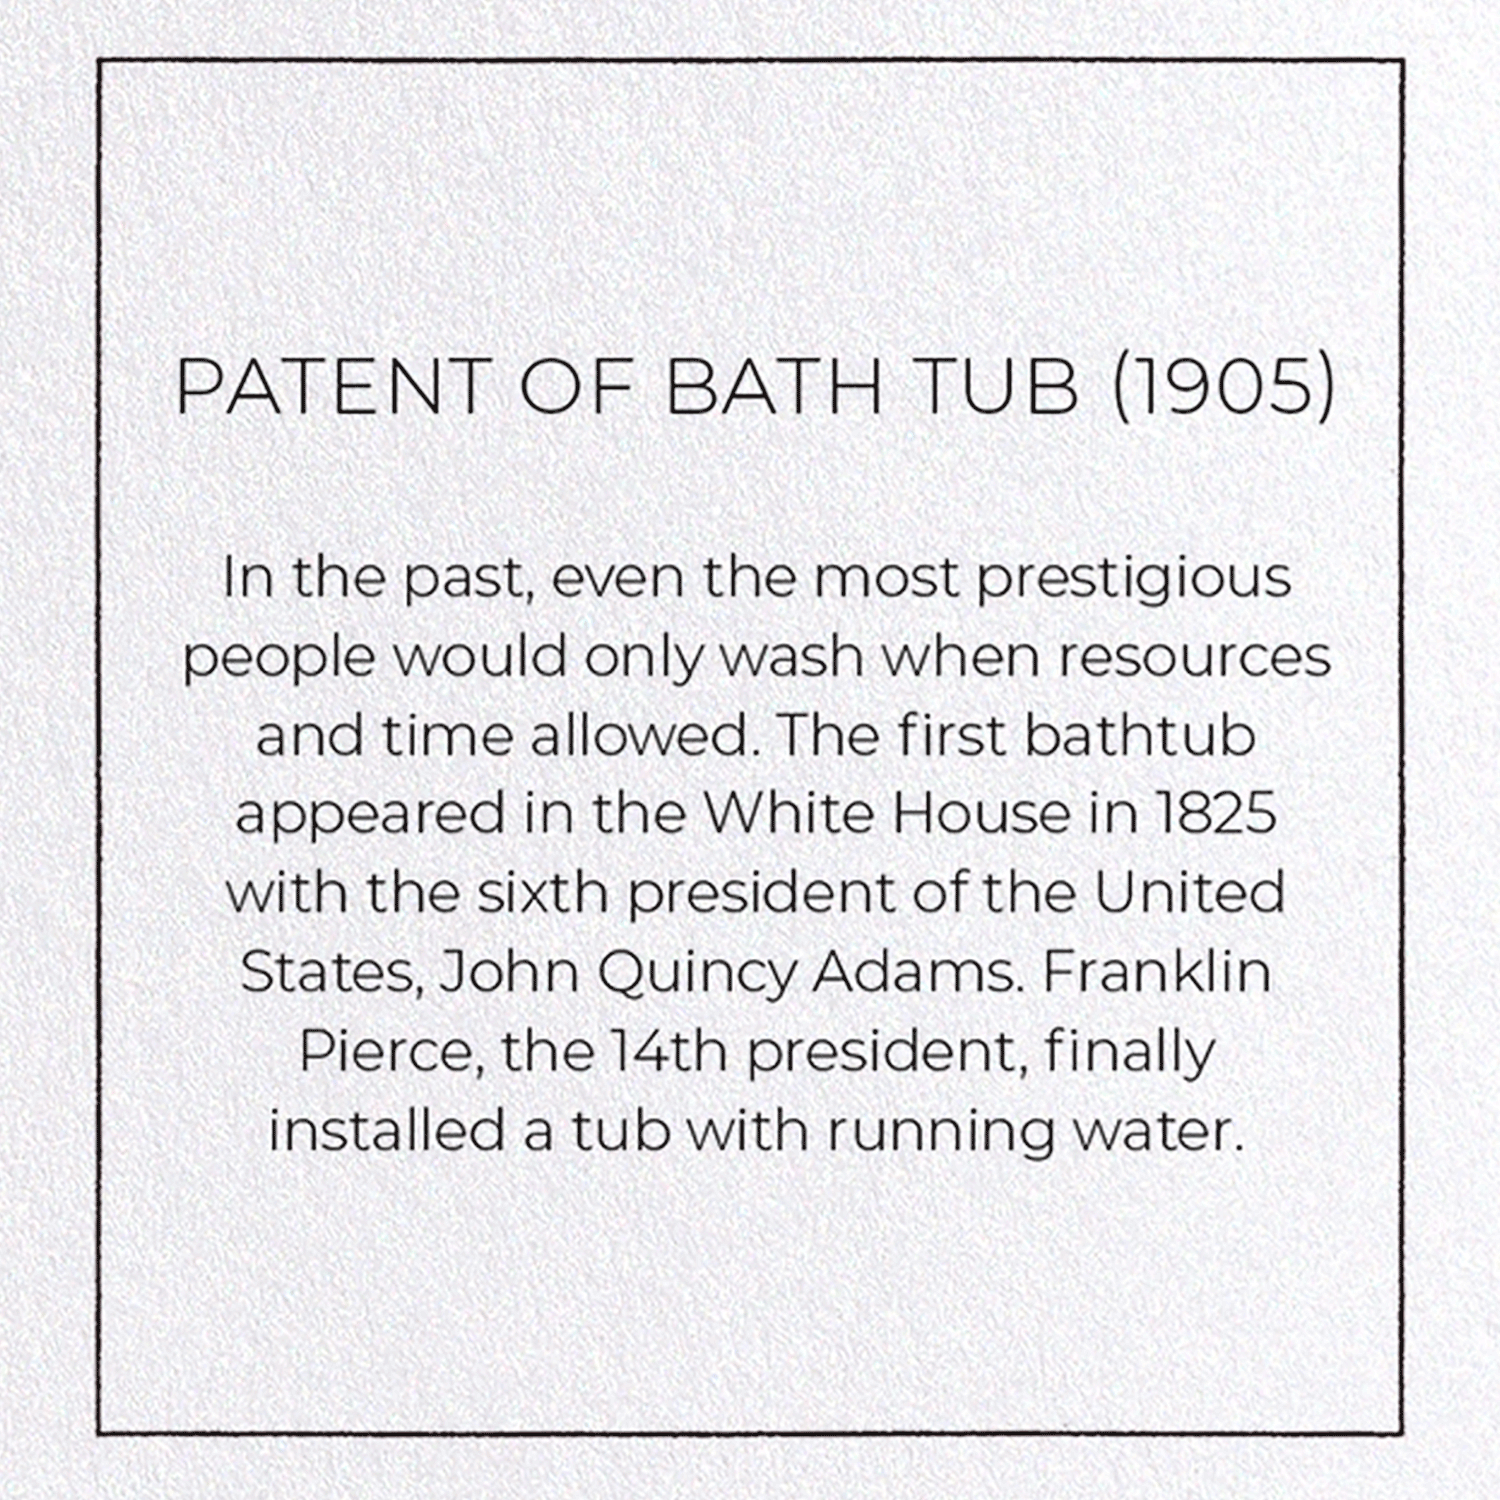 PATENT OF BATH TUB (1905)